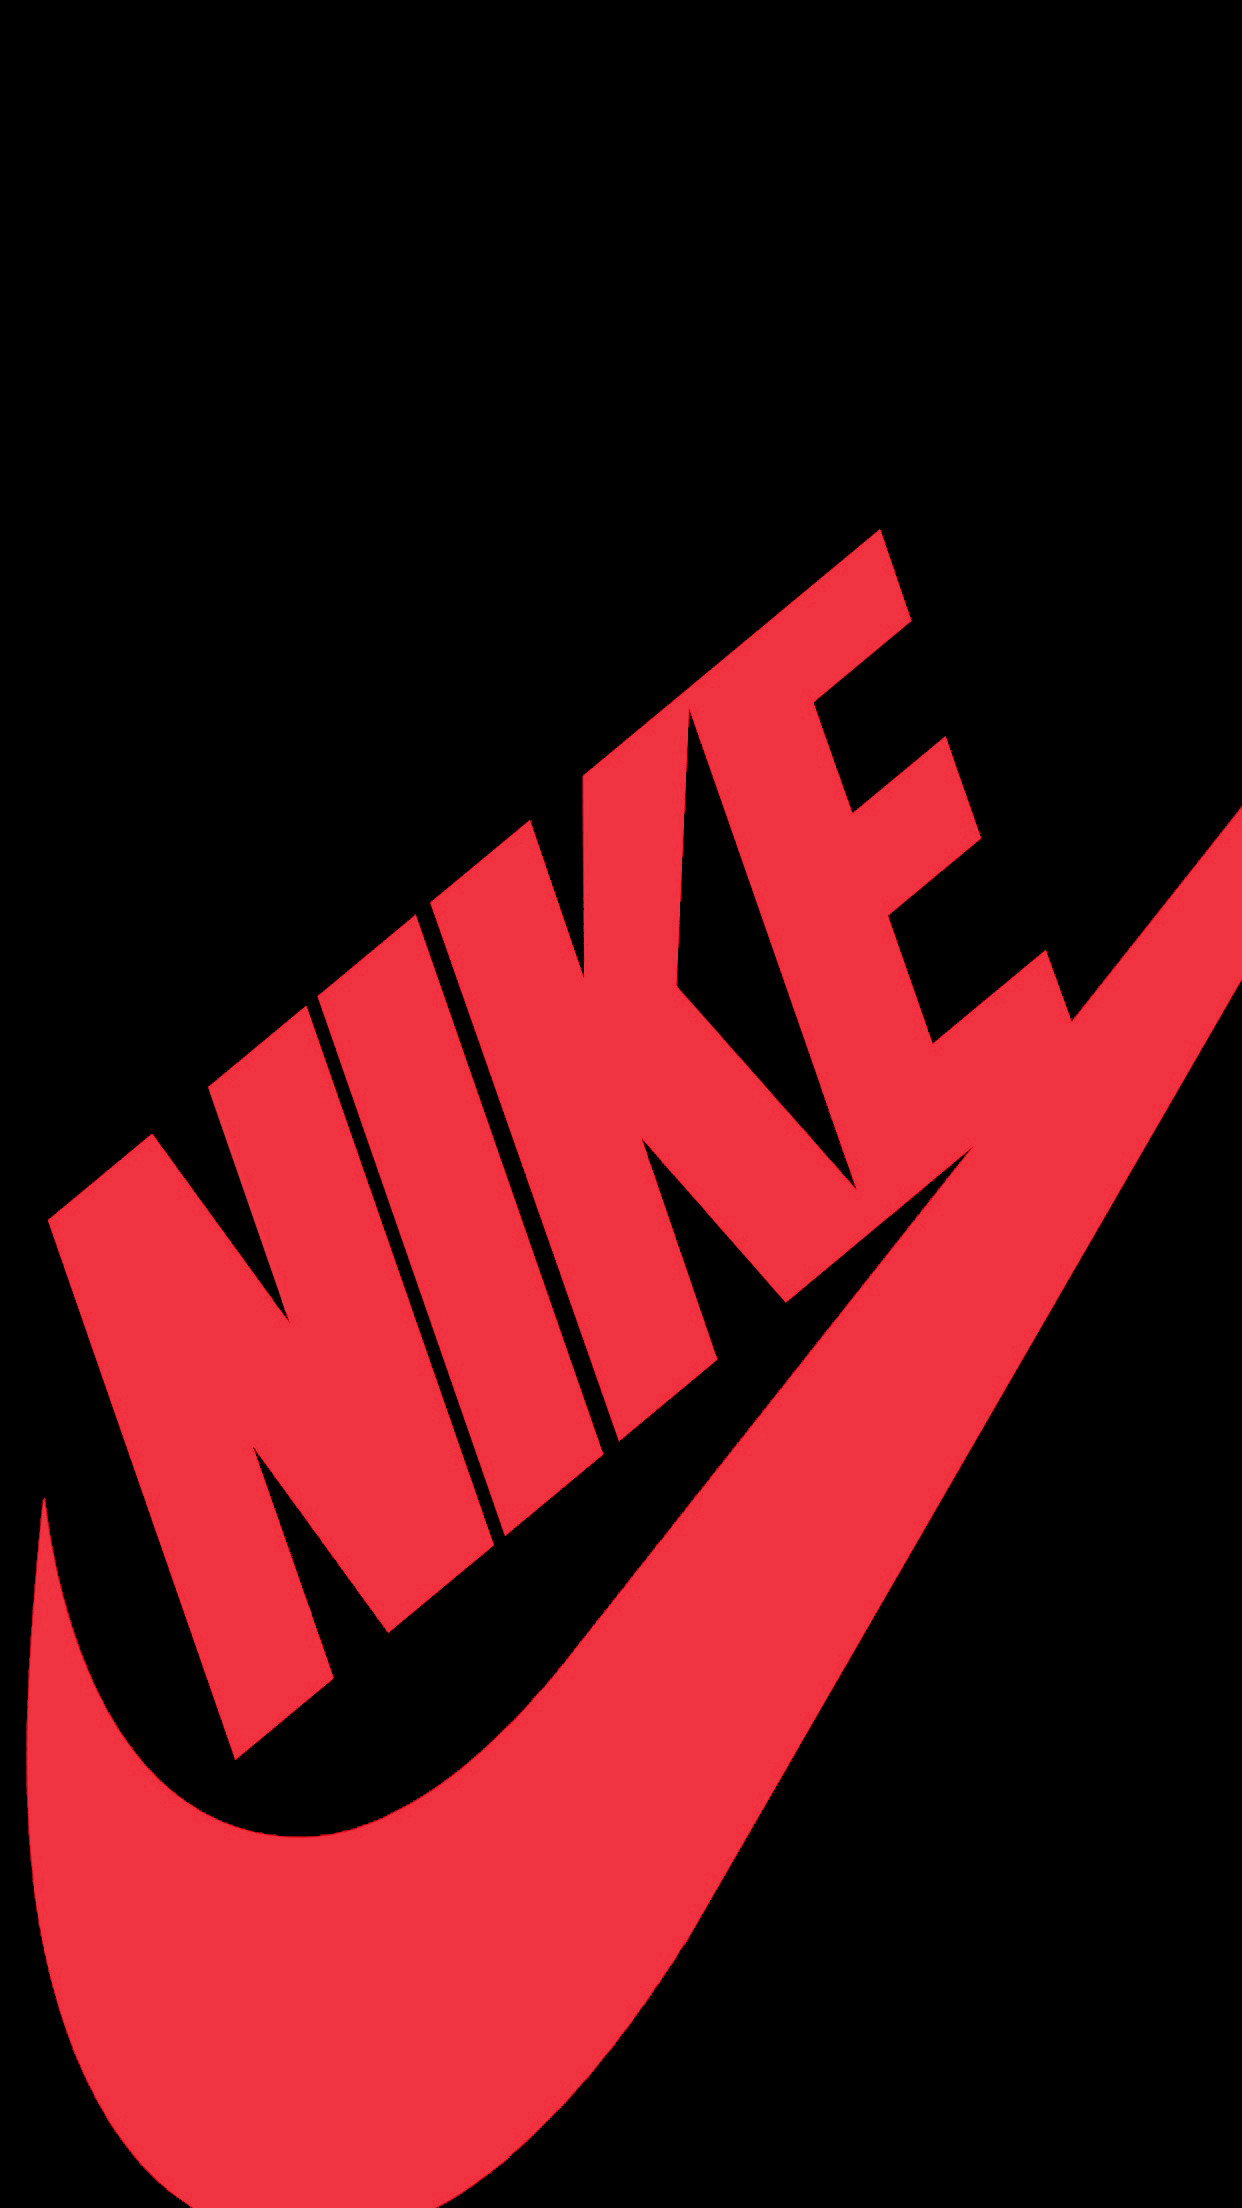 IPhone Nike Wallpaper HD (78+ images)